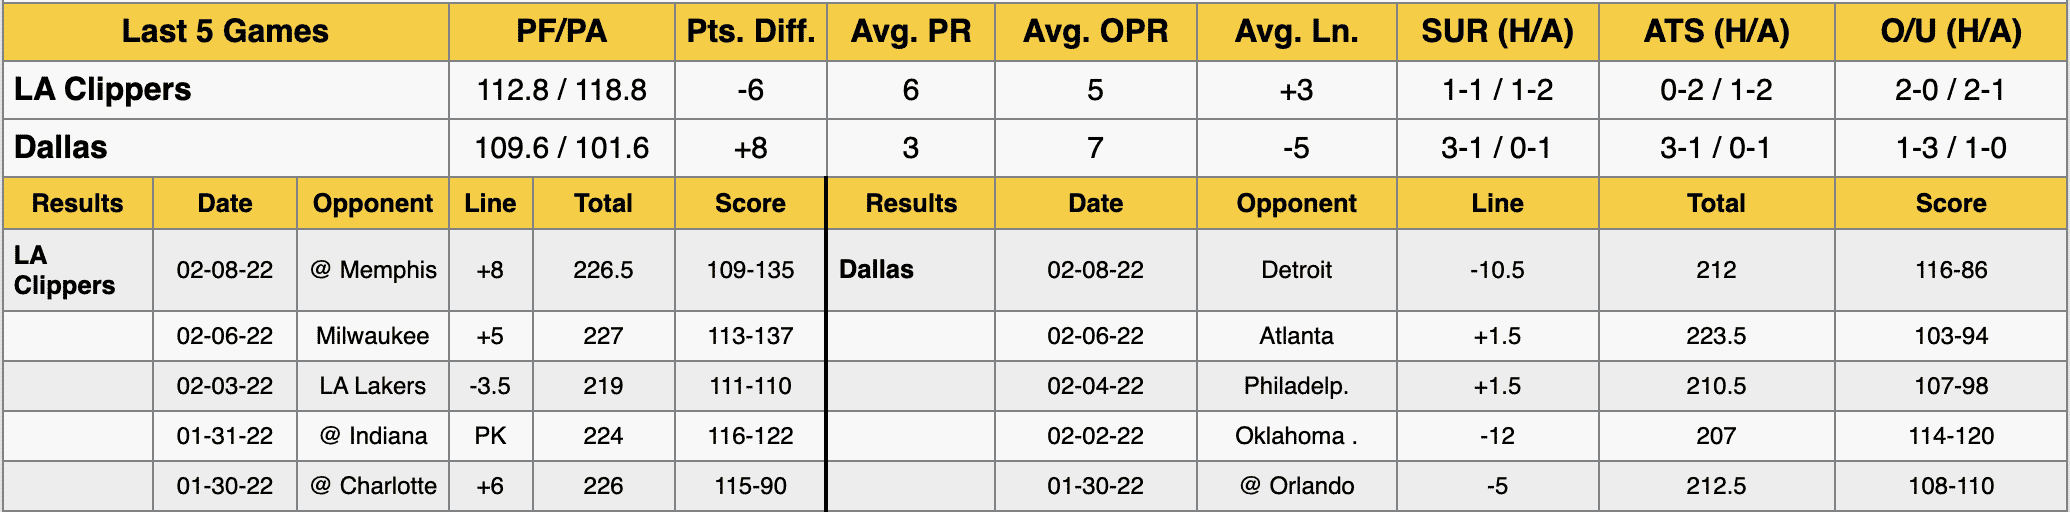 Mavericks vs Clippers Data